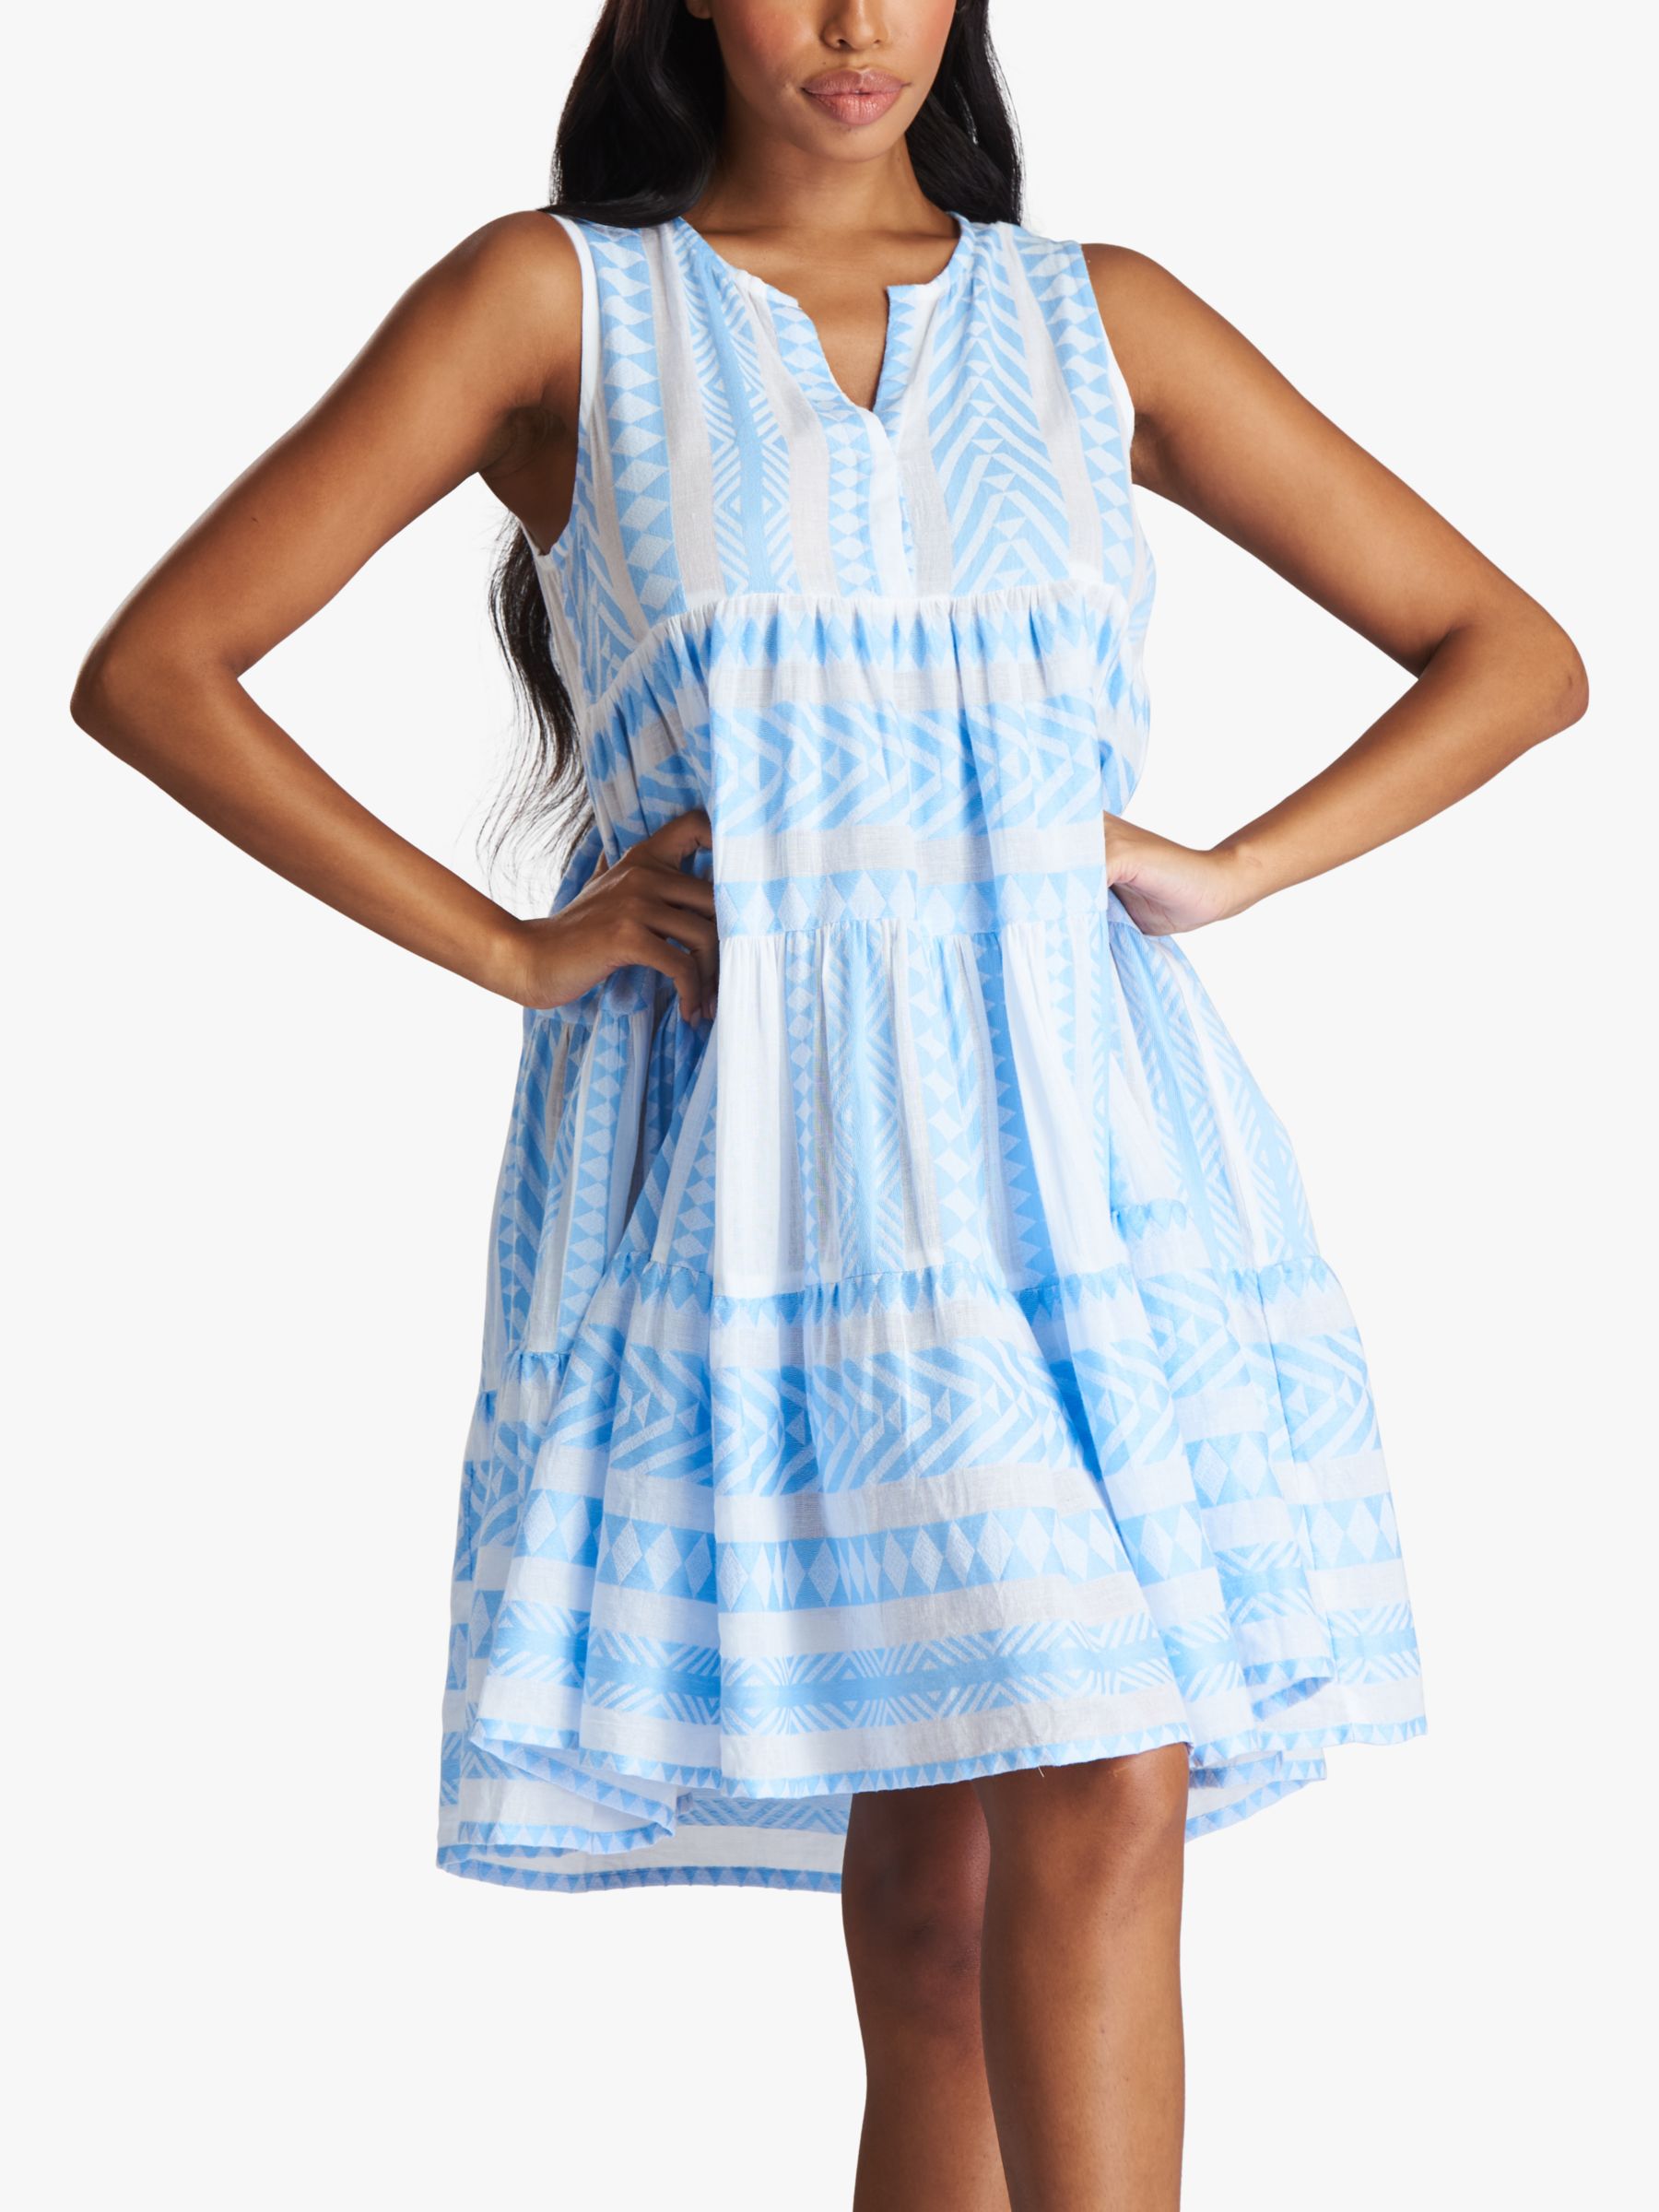 South Beach Jacquard Sleeveless Tiered Mini Dress, Blue Sky/White, 8